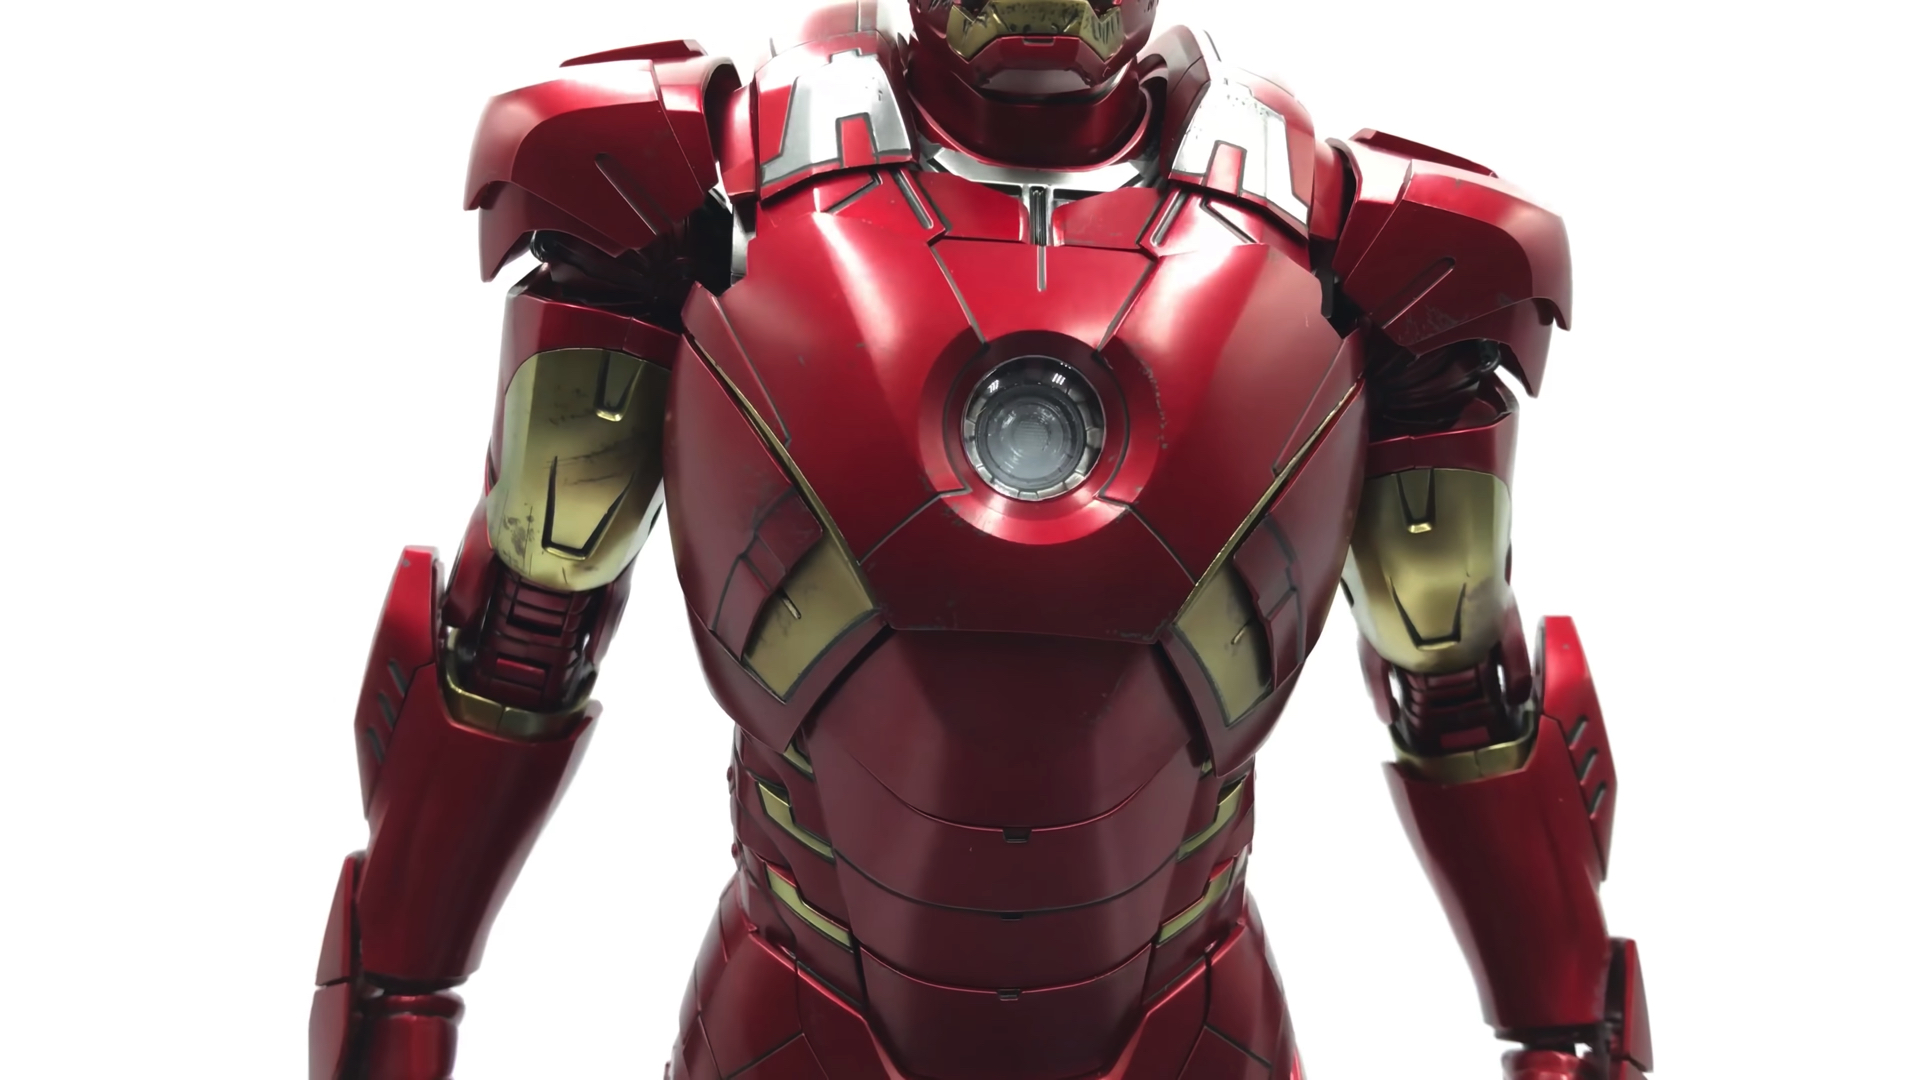 Hot Toys Iron Man Mark 20 MK VII Avengers Review   Figround